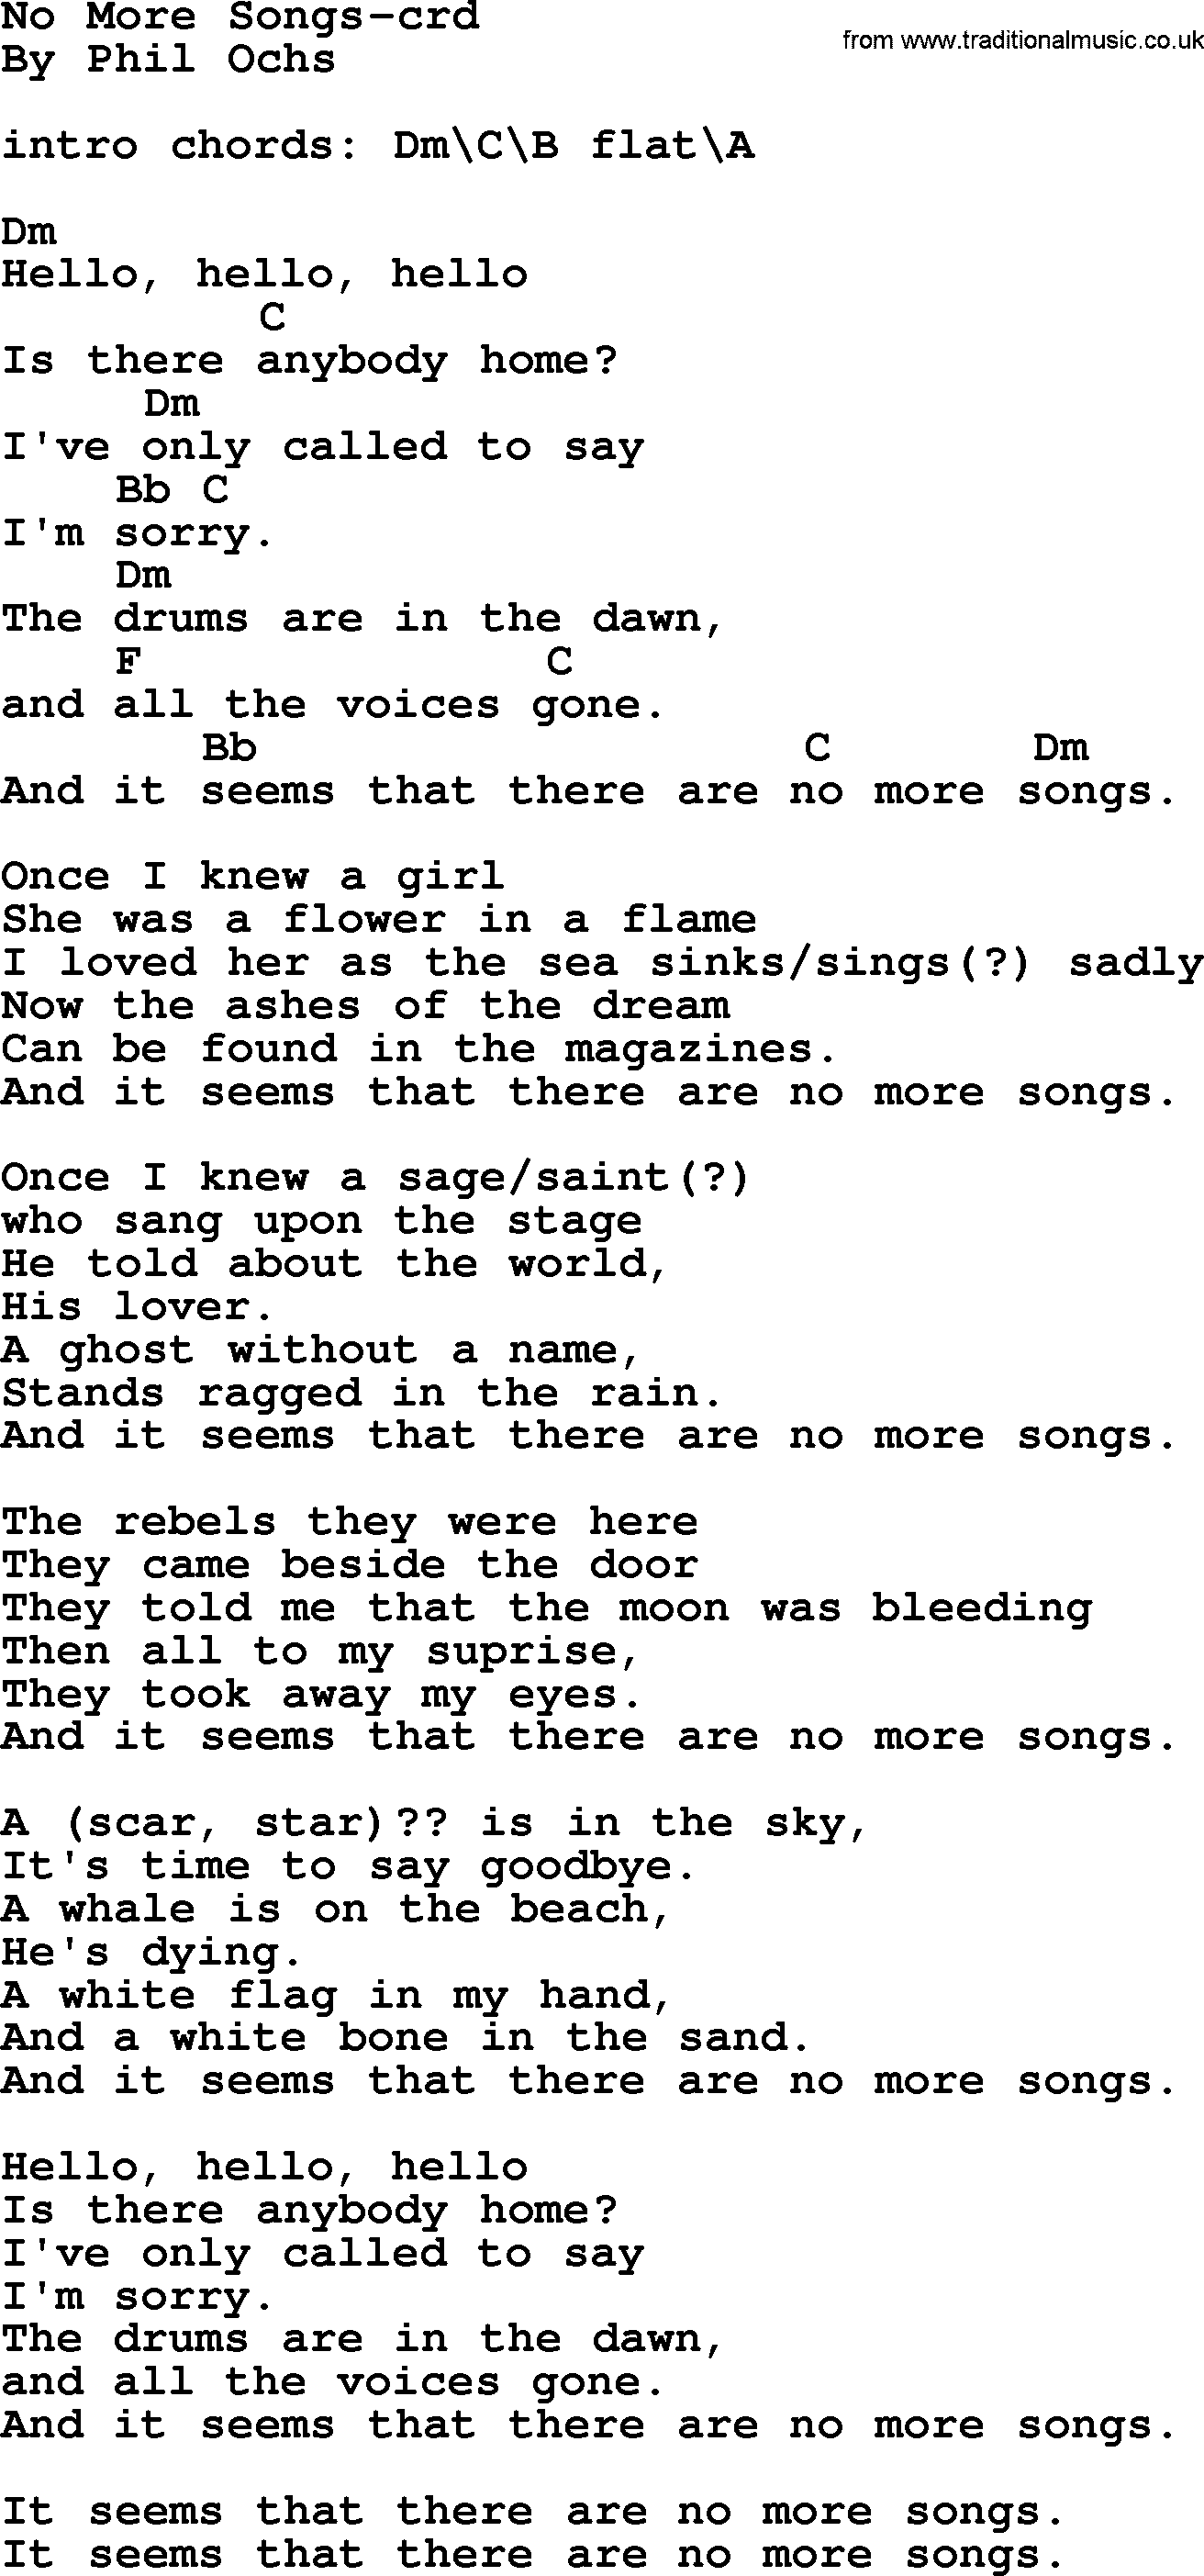 Phil Ochs song No More Songs- by Phil Ochs, lyrics and chords